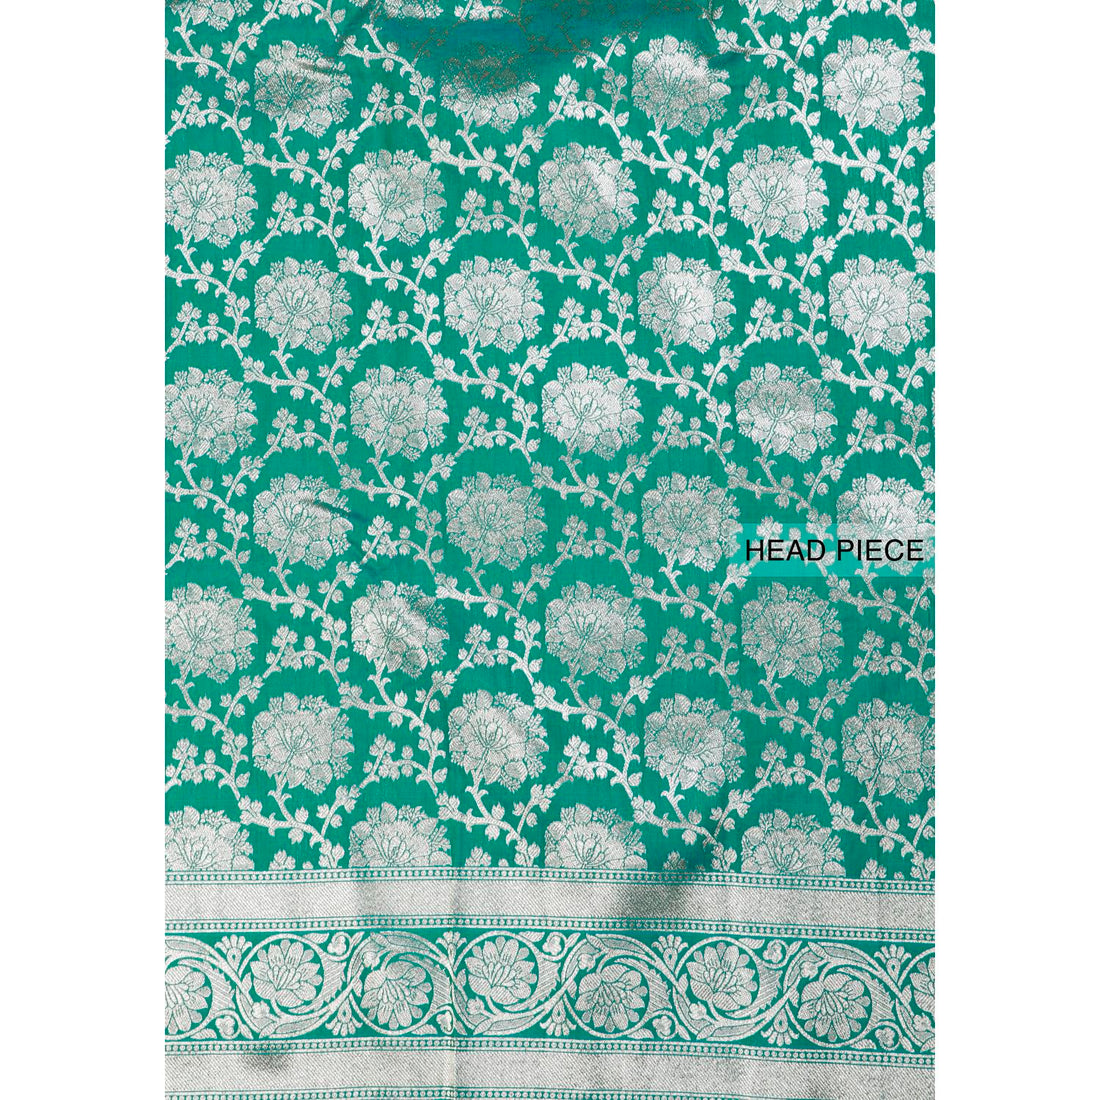 Green Colour Banarasi Silk Saree with Flower Design Border